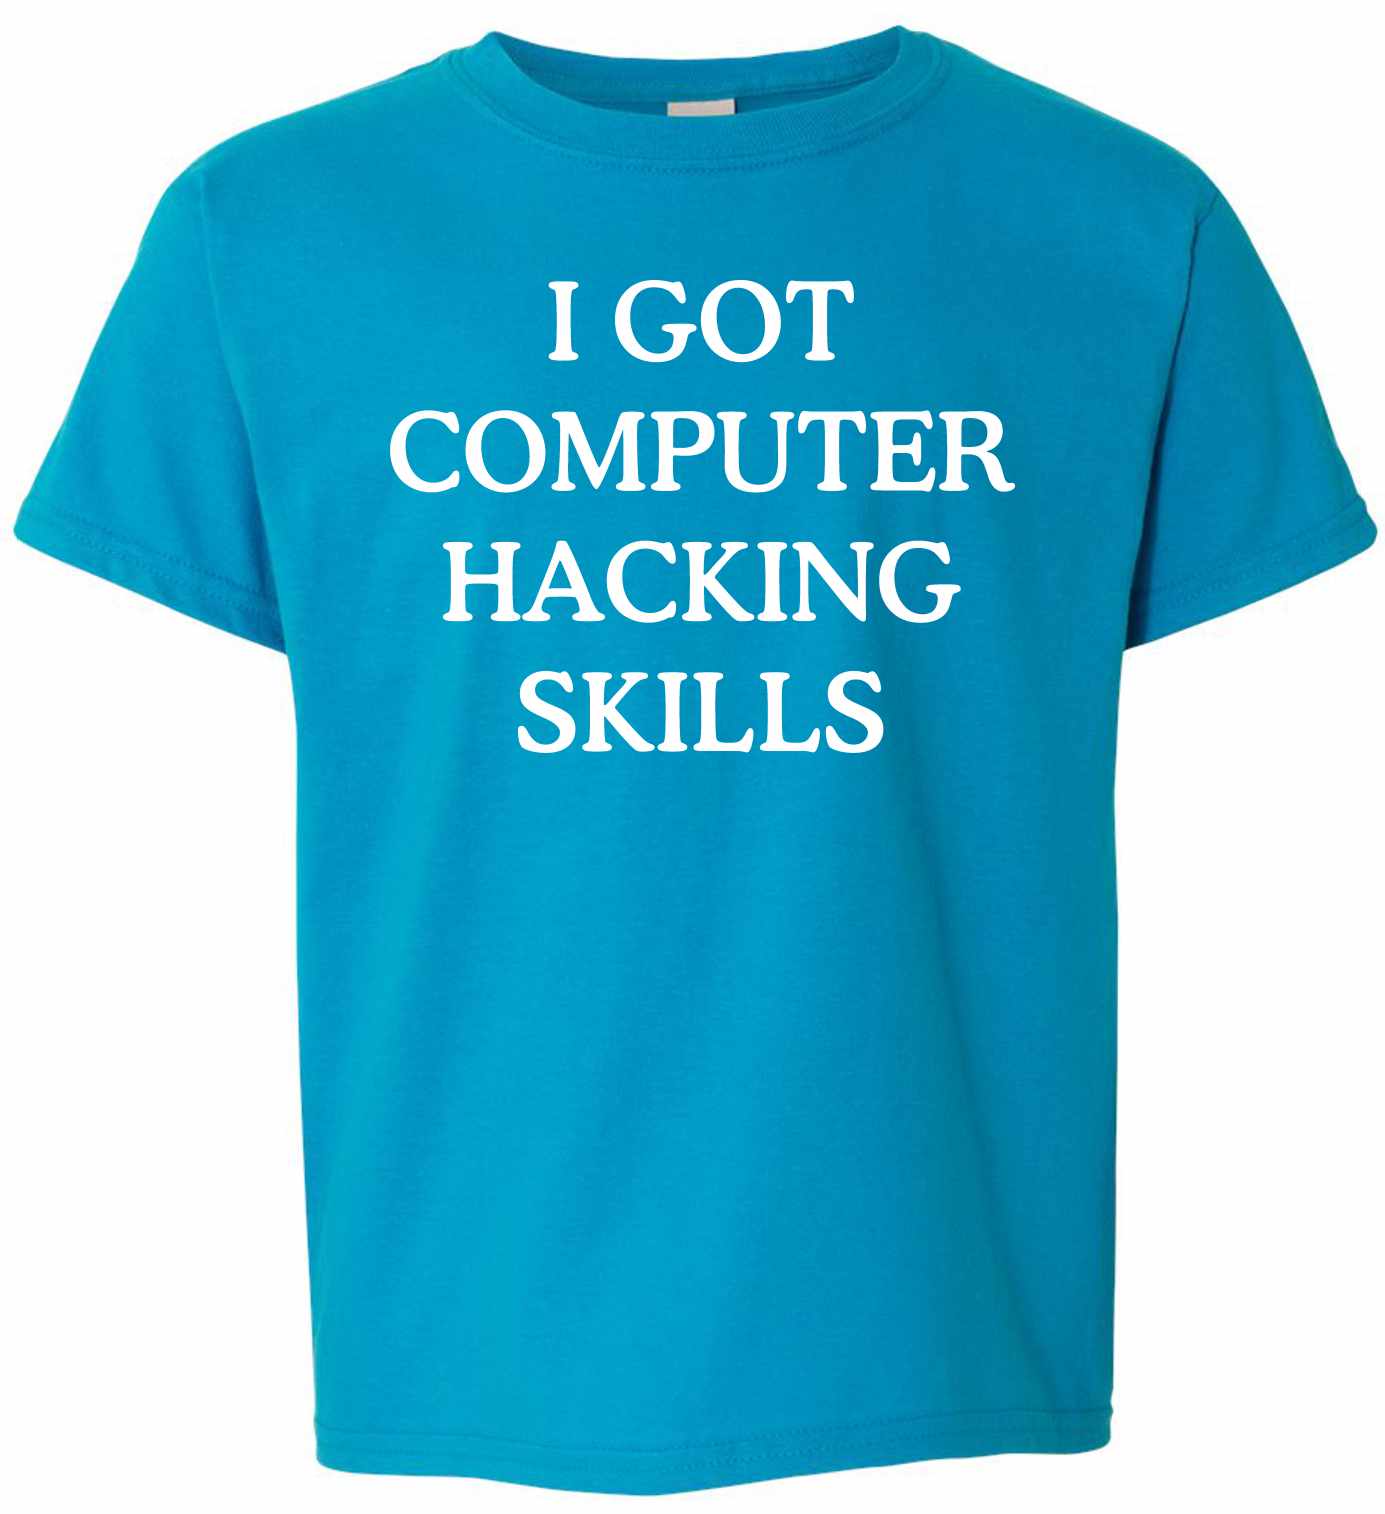 I GOT COMPUTER HACKING SKILLS on Kids T-Shirt (#382-201)